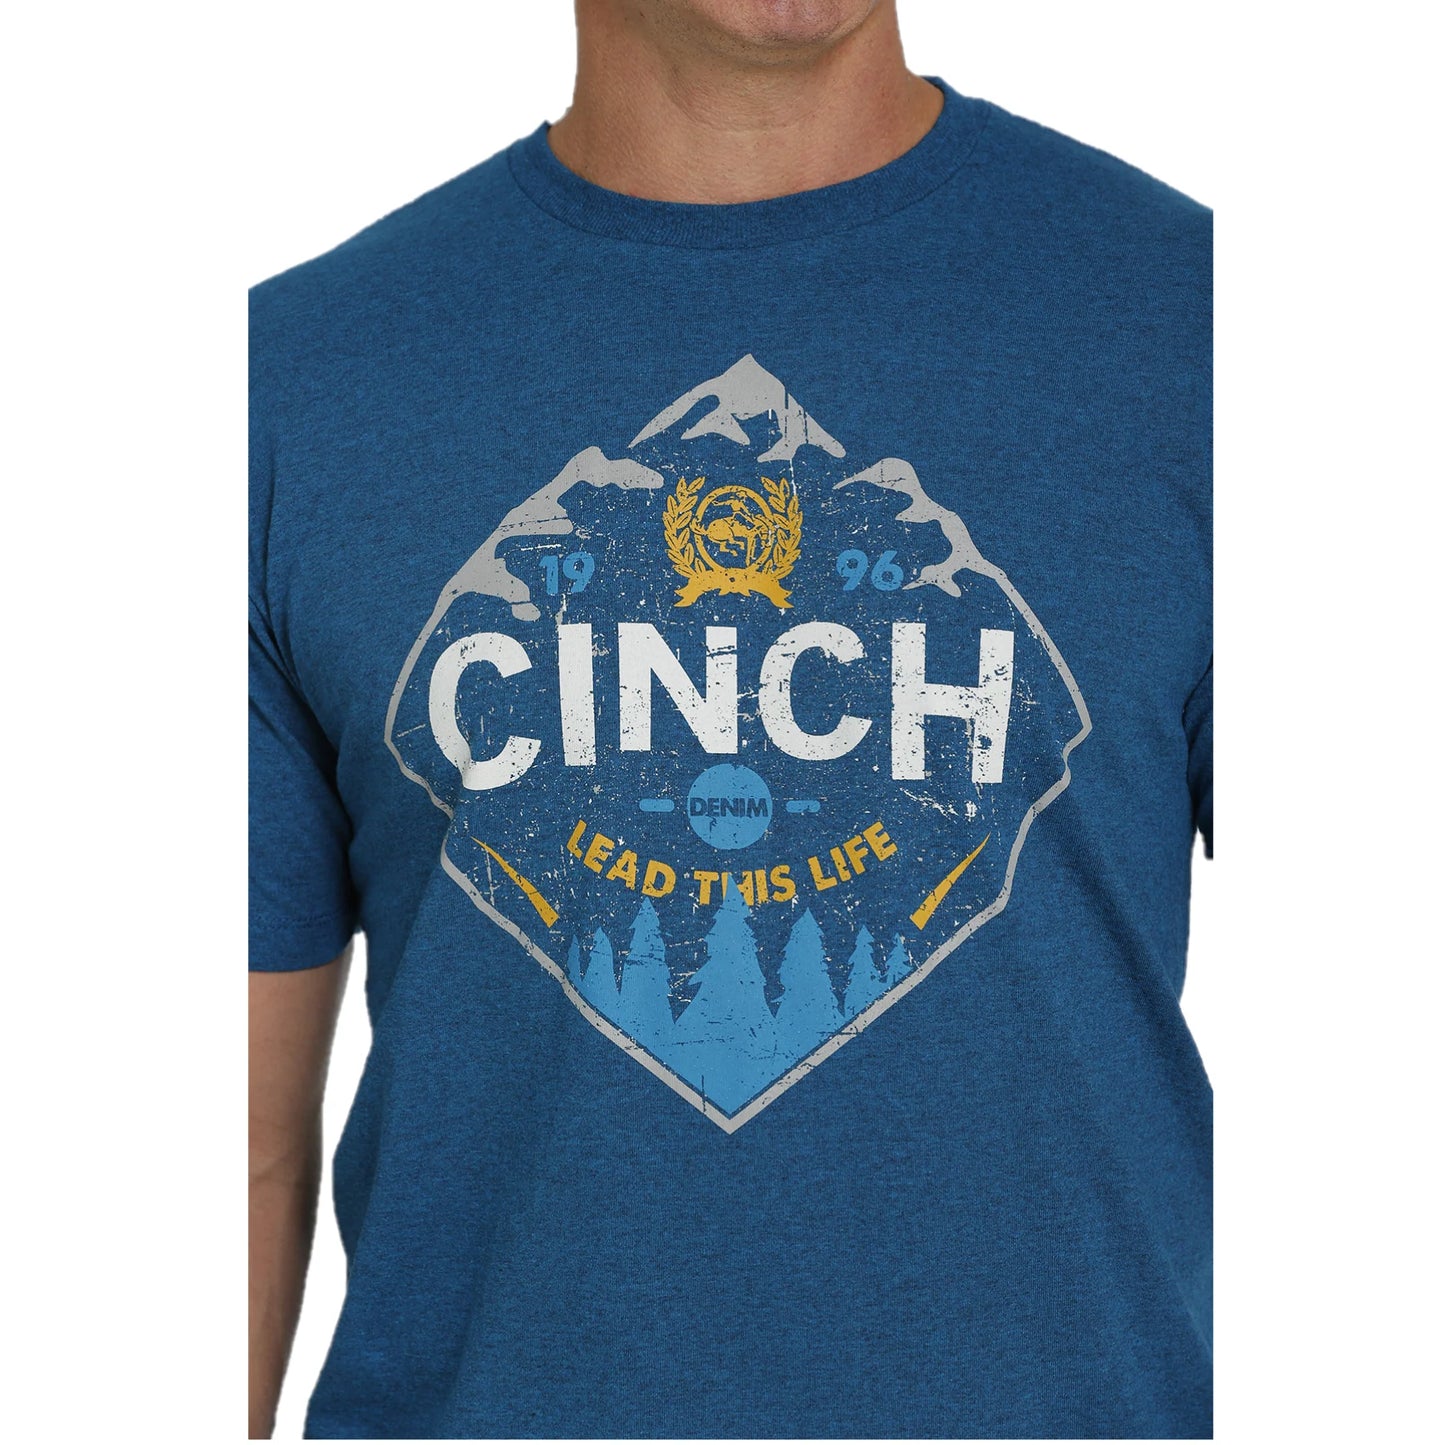 Cinch Mountain Graphic T-Shirt - Teal